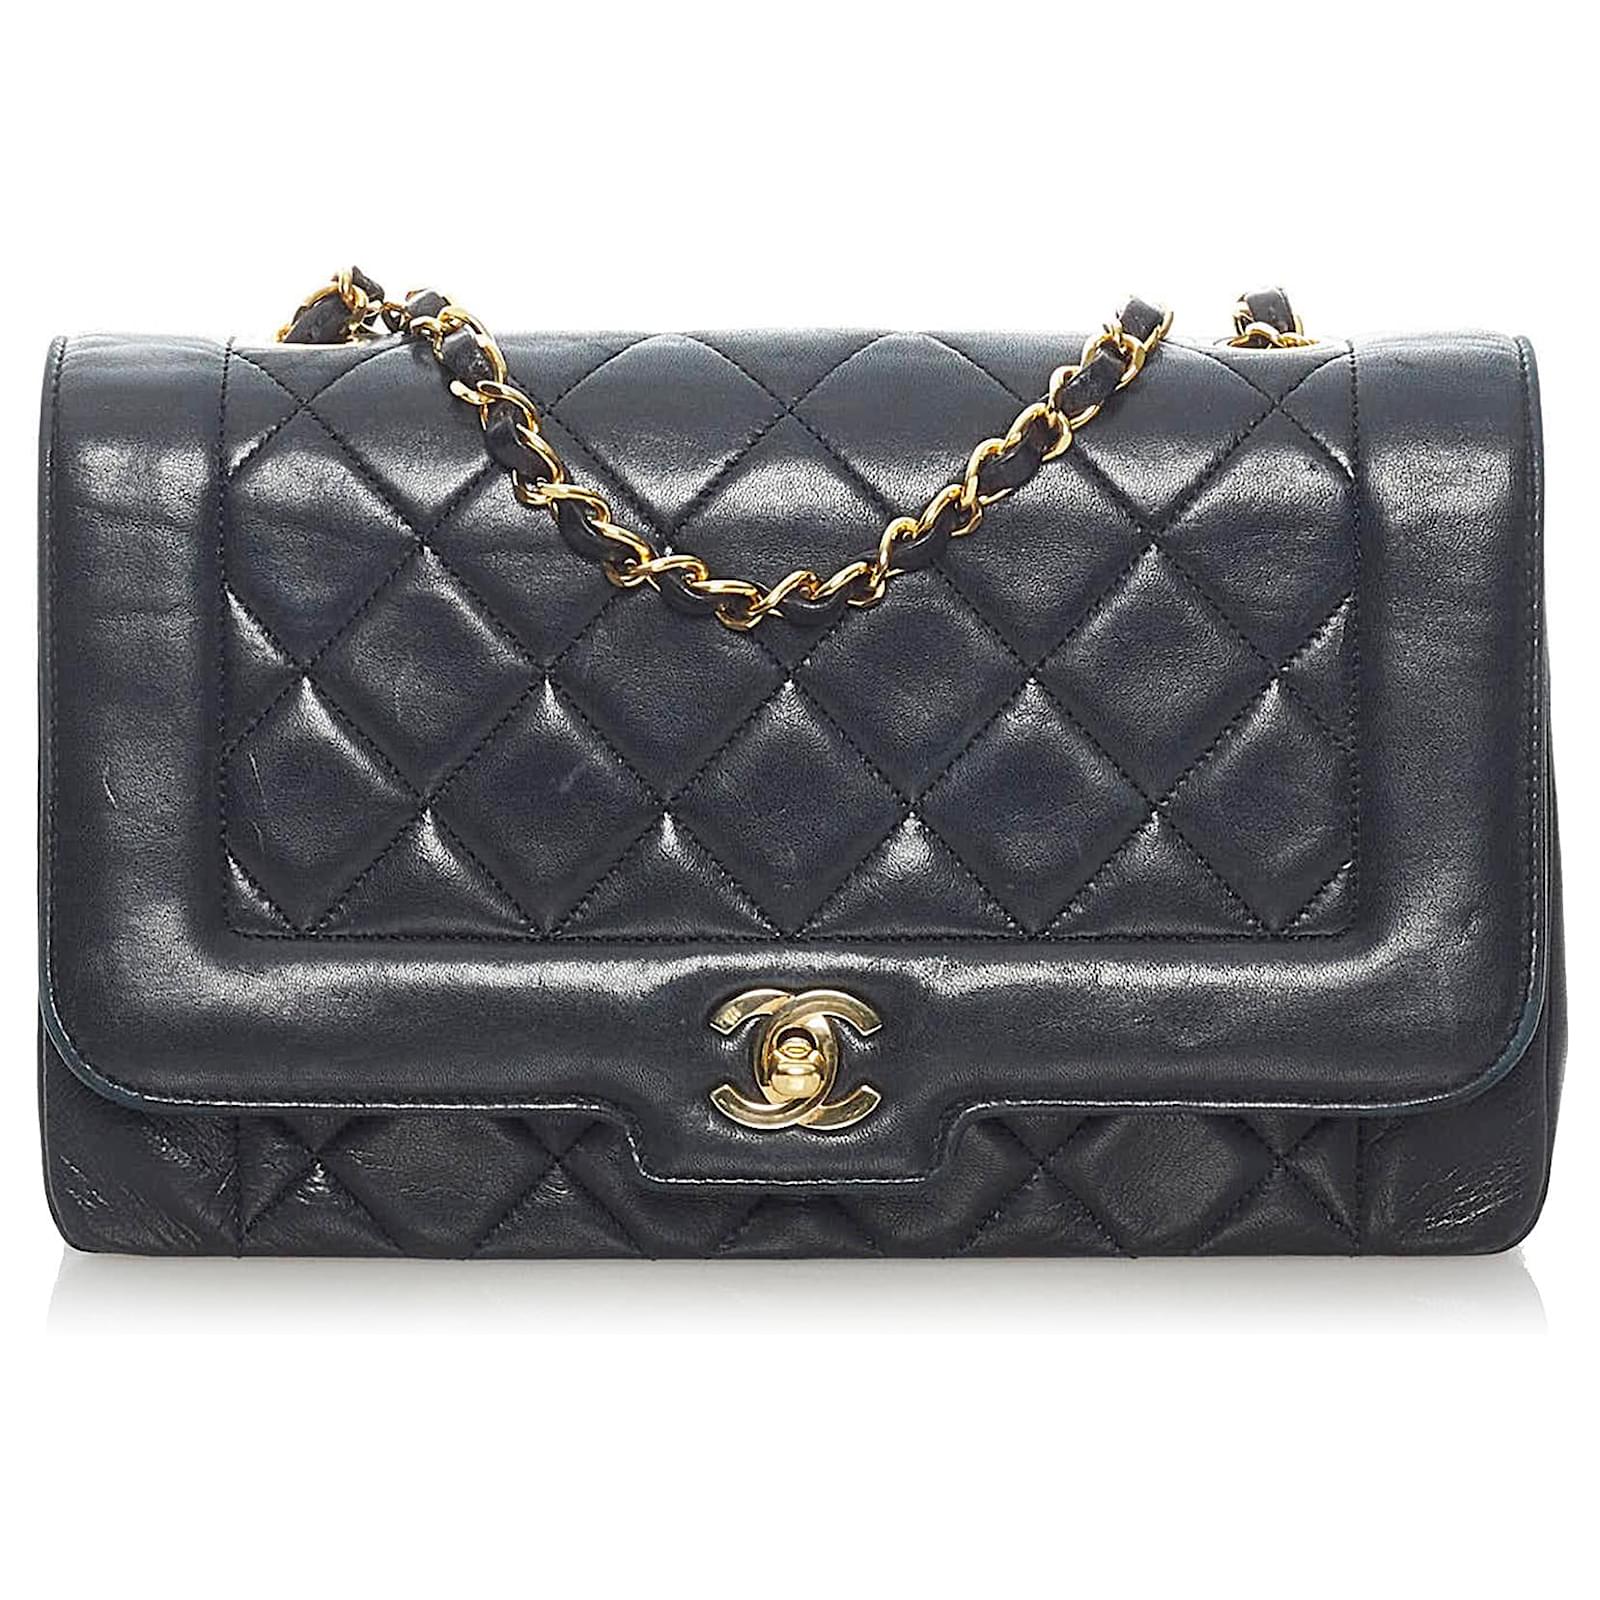 Chanel Vintage small Diana bag black lambskin gold